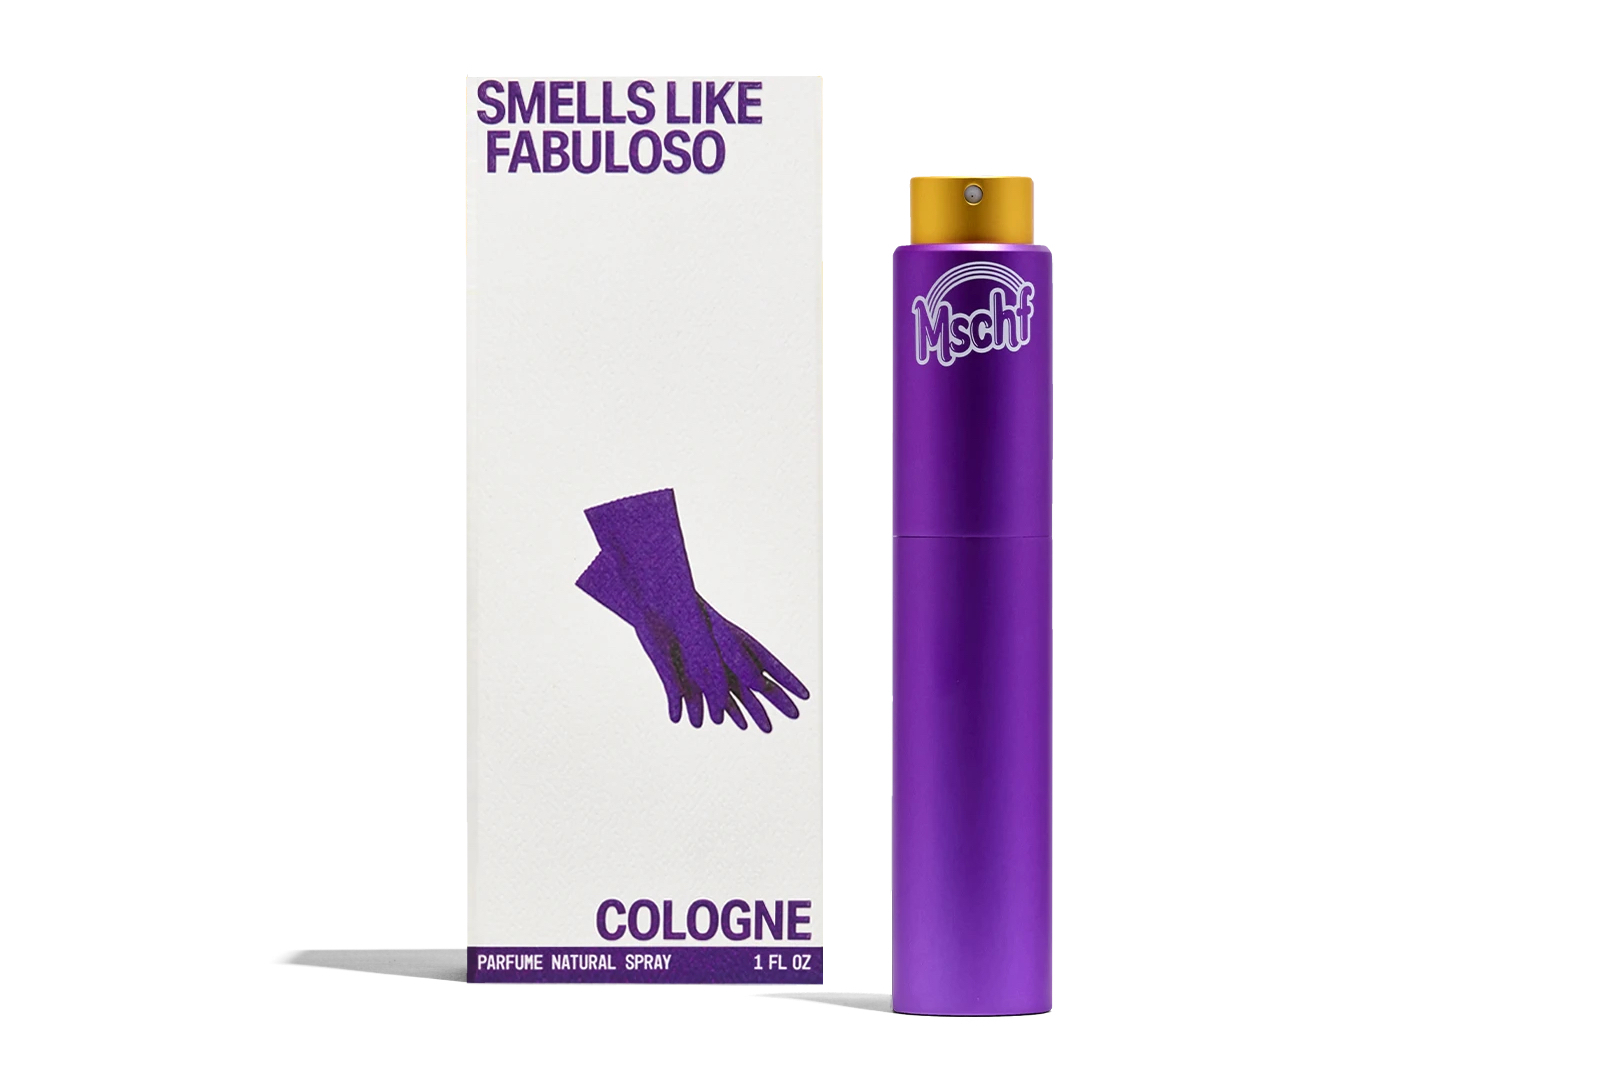 MSCHF Smells Like Fabuloso Cologne Fragrance Perfume